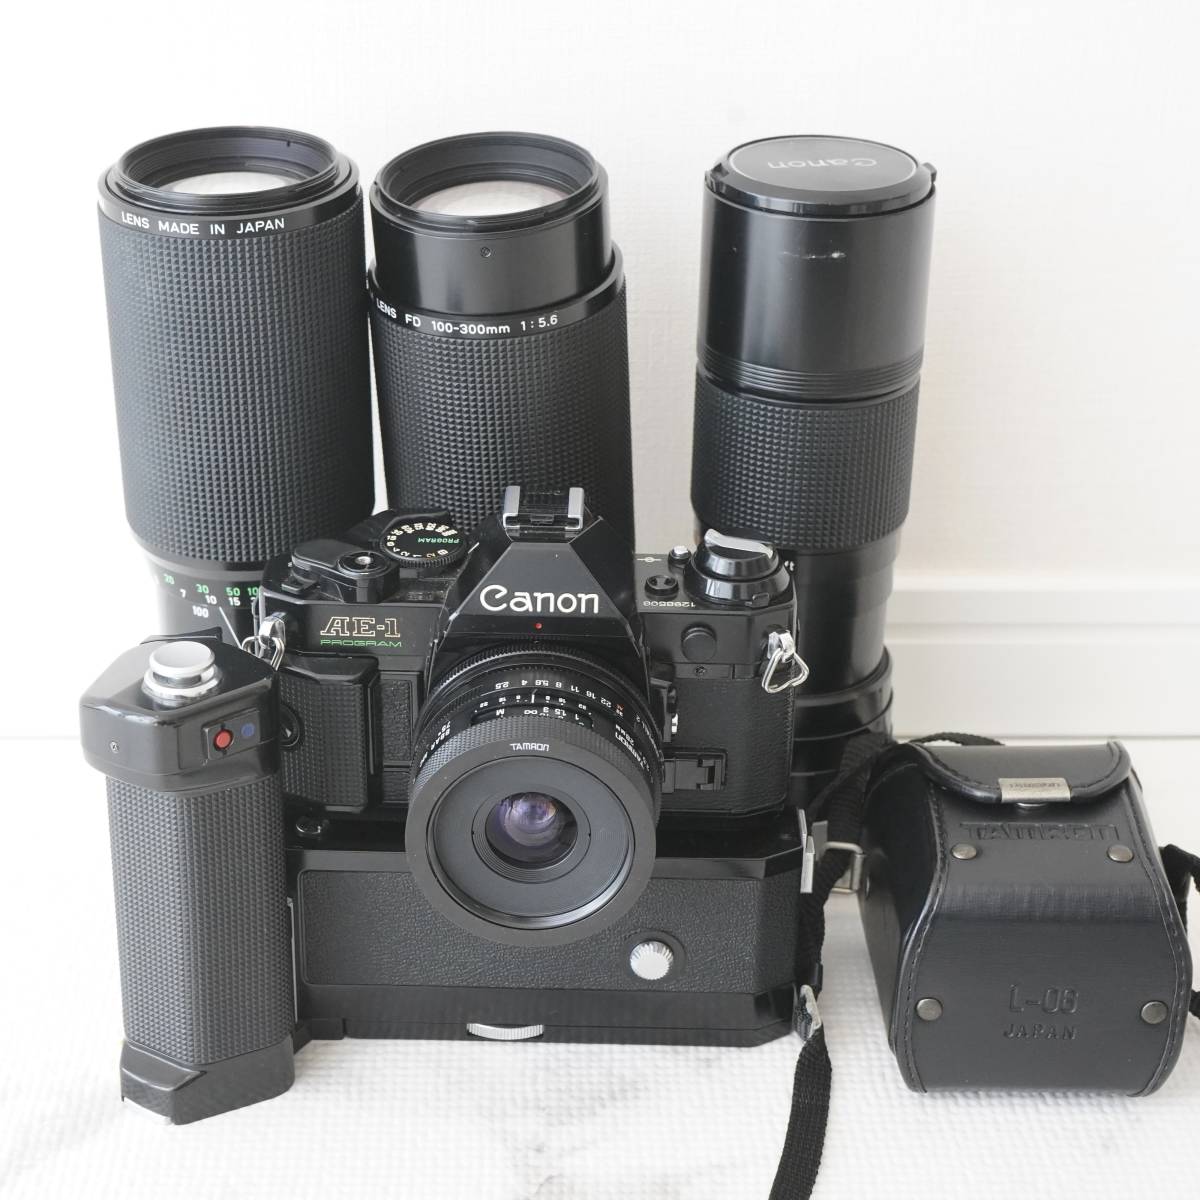 Canon AE-1 Program Black, Motor Drive MF, Tamron SP 28mm F2